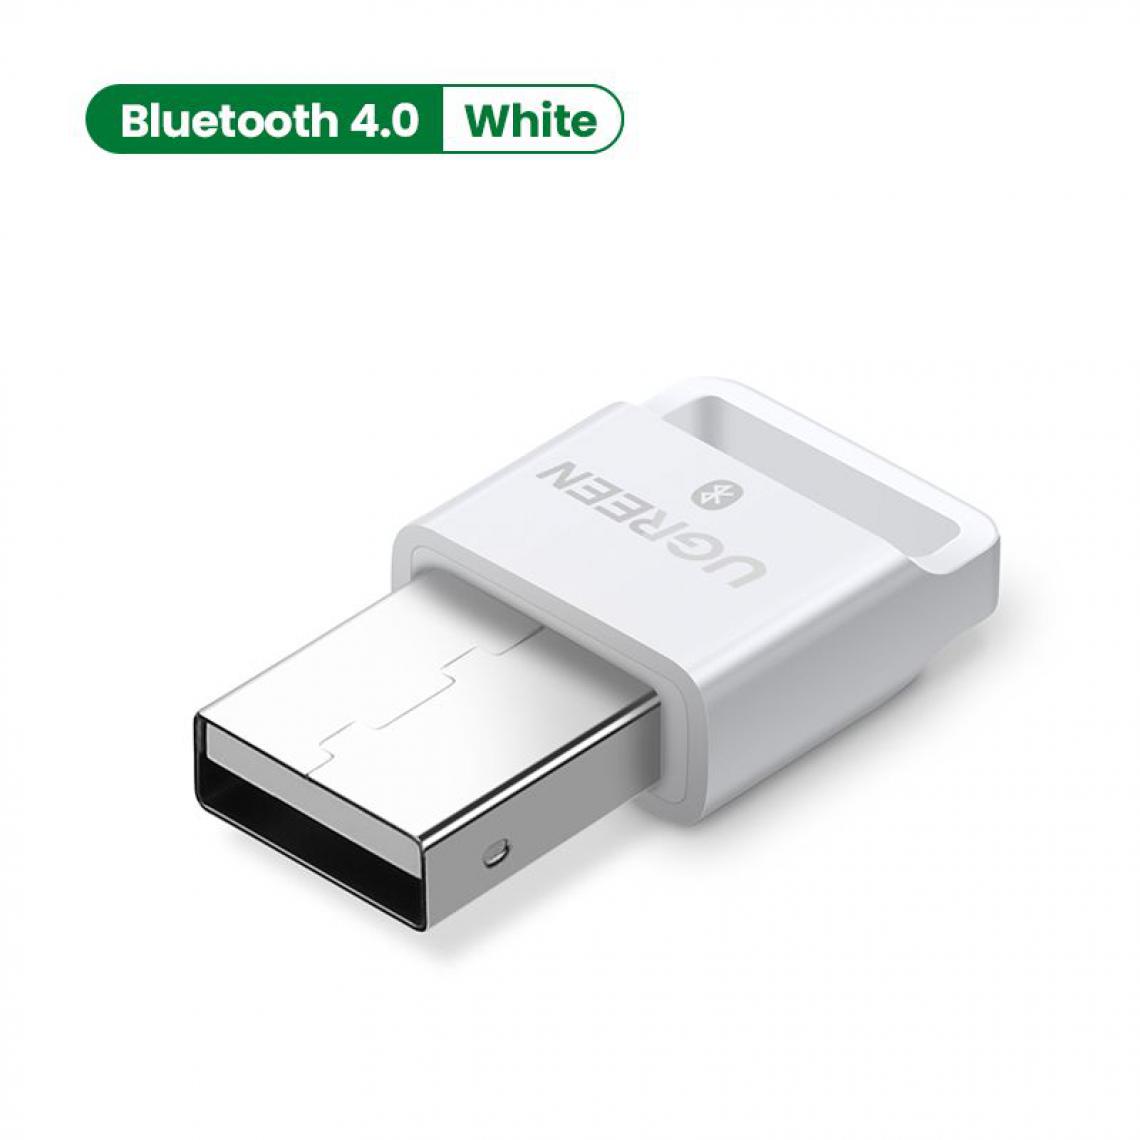 Generic -  Aadaptateur Usb Bluetooth 4.0 , Dongle 4.0 pour Pc - Blanc  - Clé USB Wifi